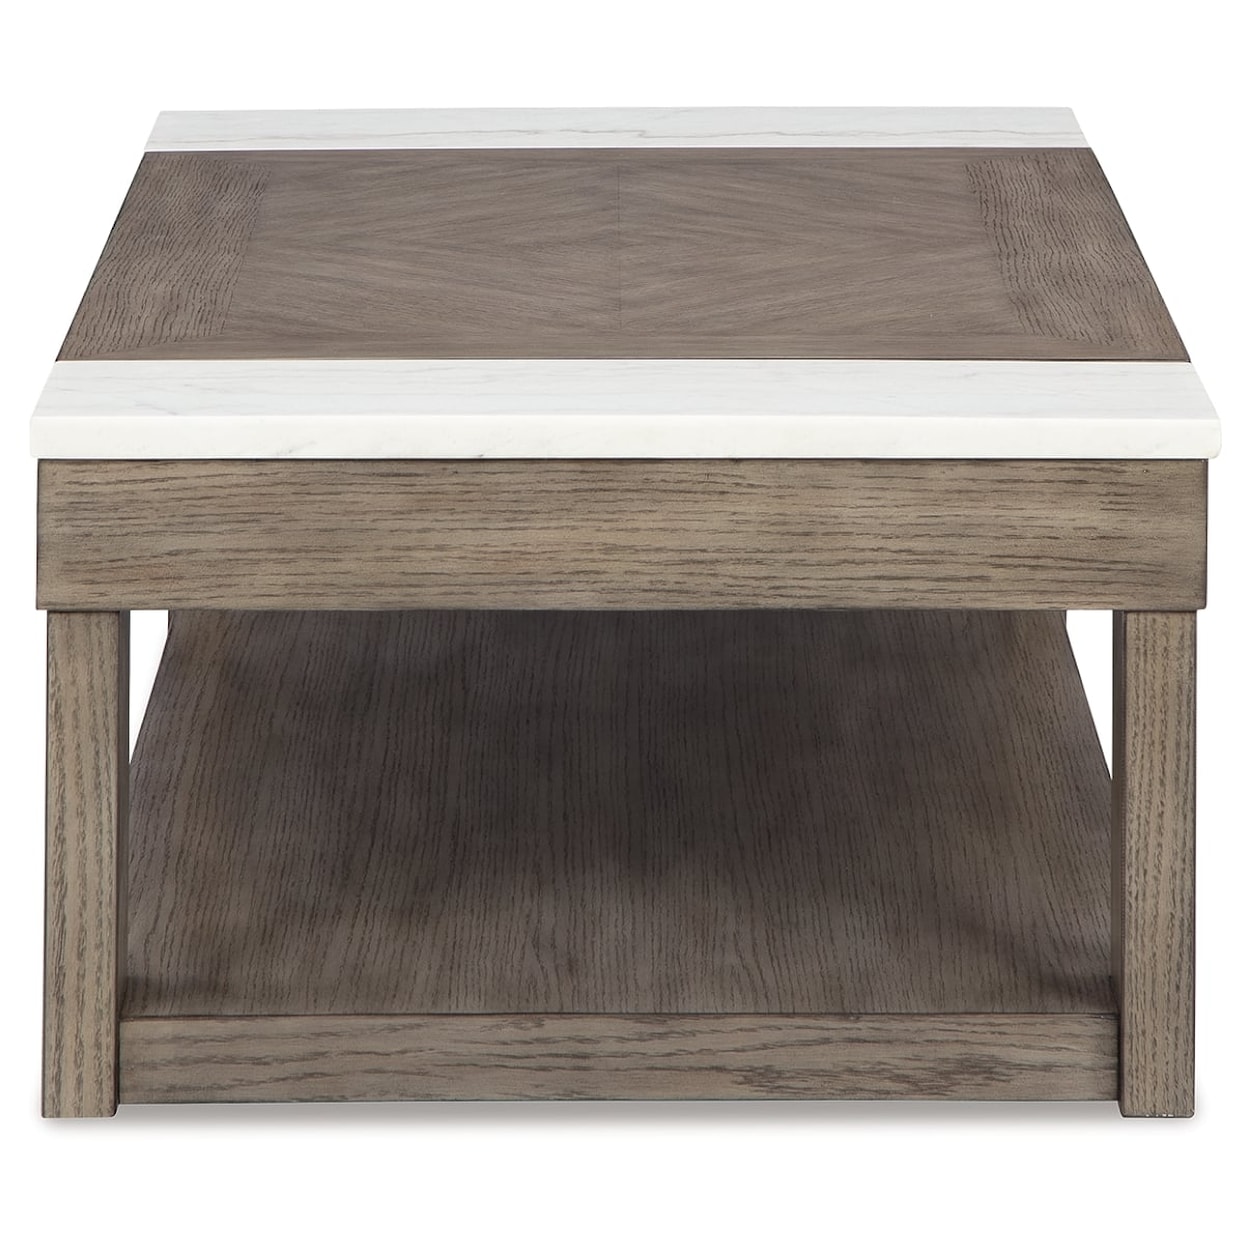 Ashley Furniture Signature Design Loyaska Lift-Top Coffee Table